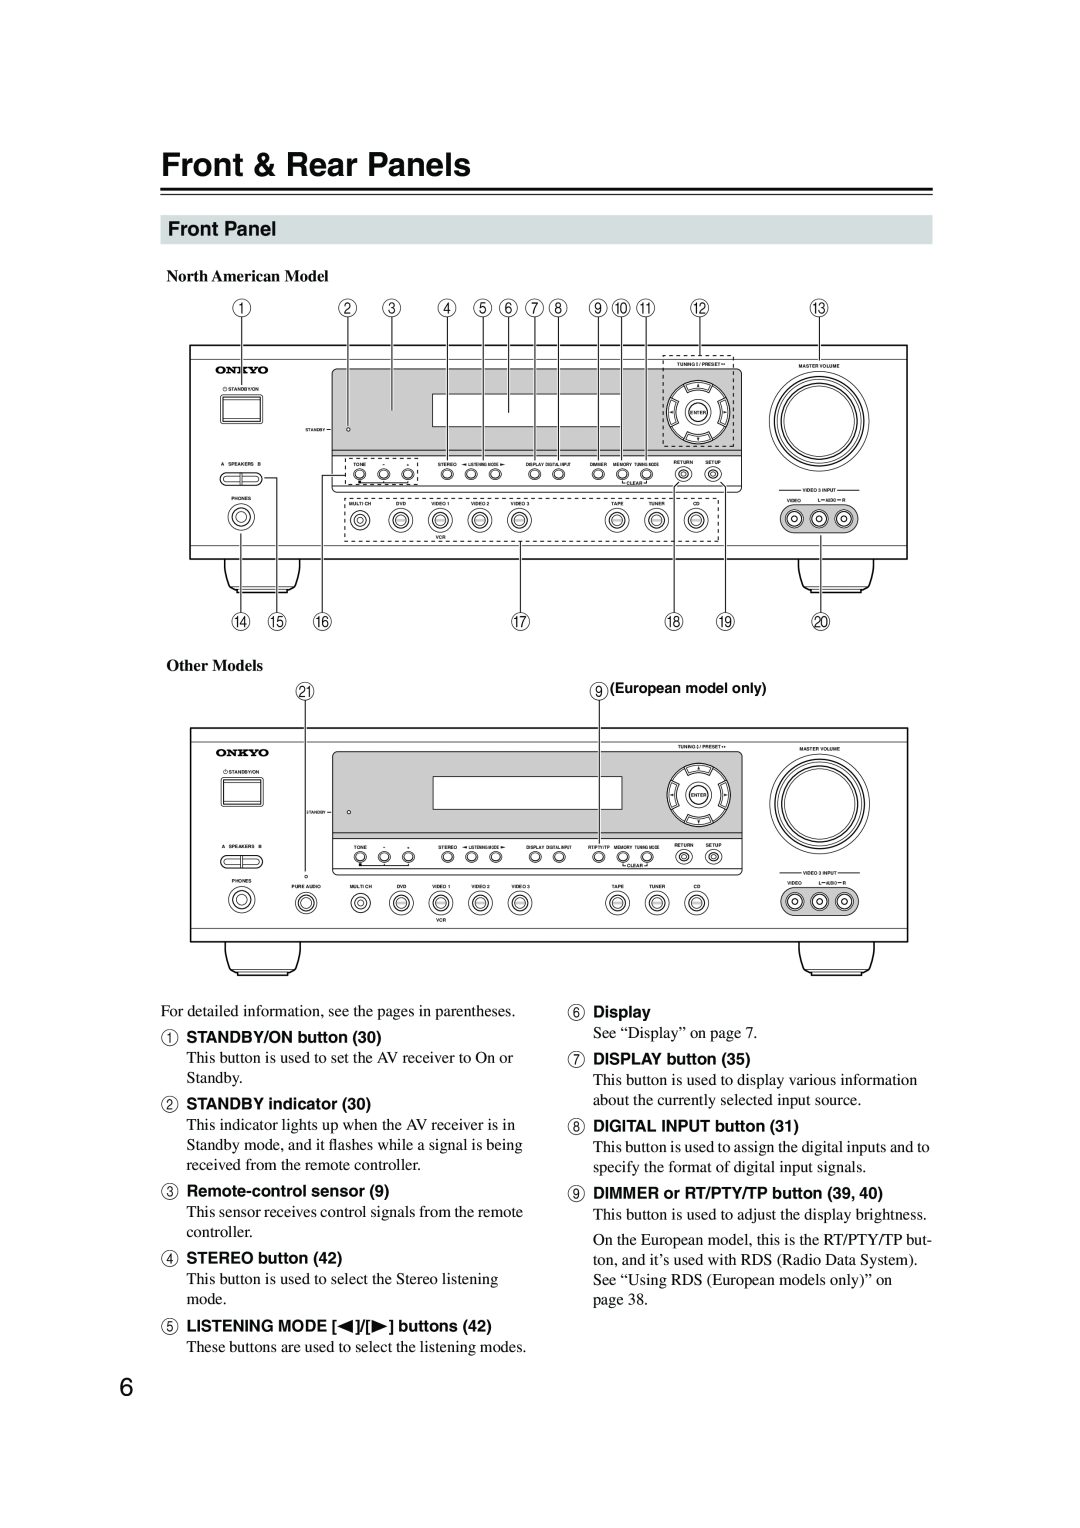 Onkyo TX-SR8350, TX-SR503E instruction manual Front & Rear Panels, Front Panel, 2 3 4 5 6 78 9J K L 